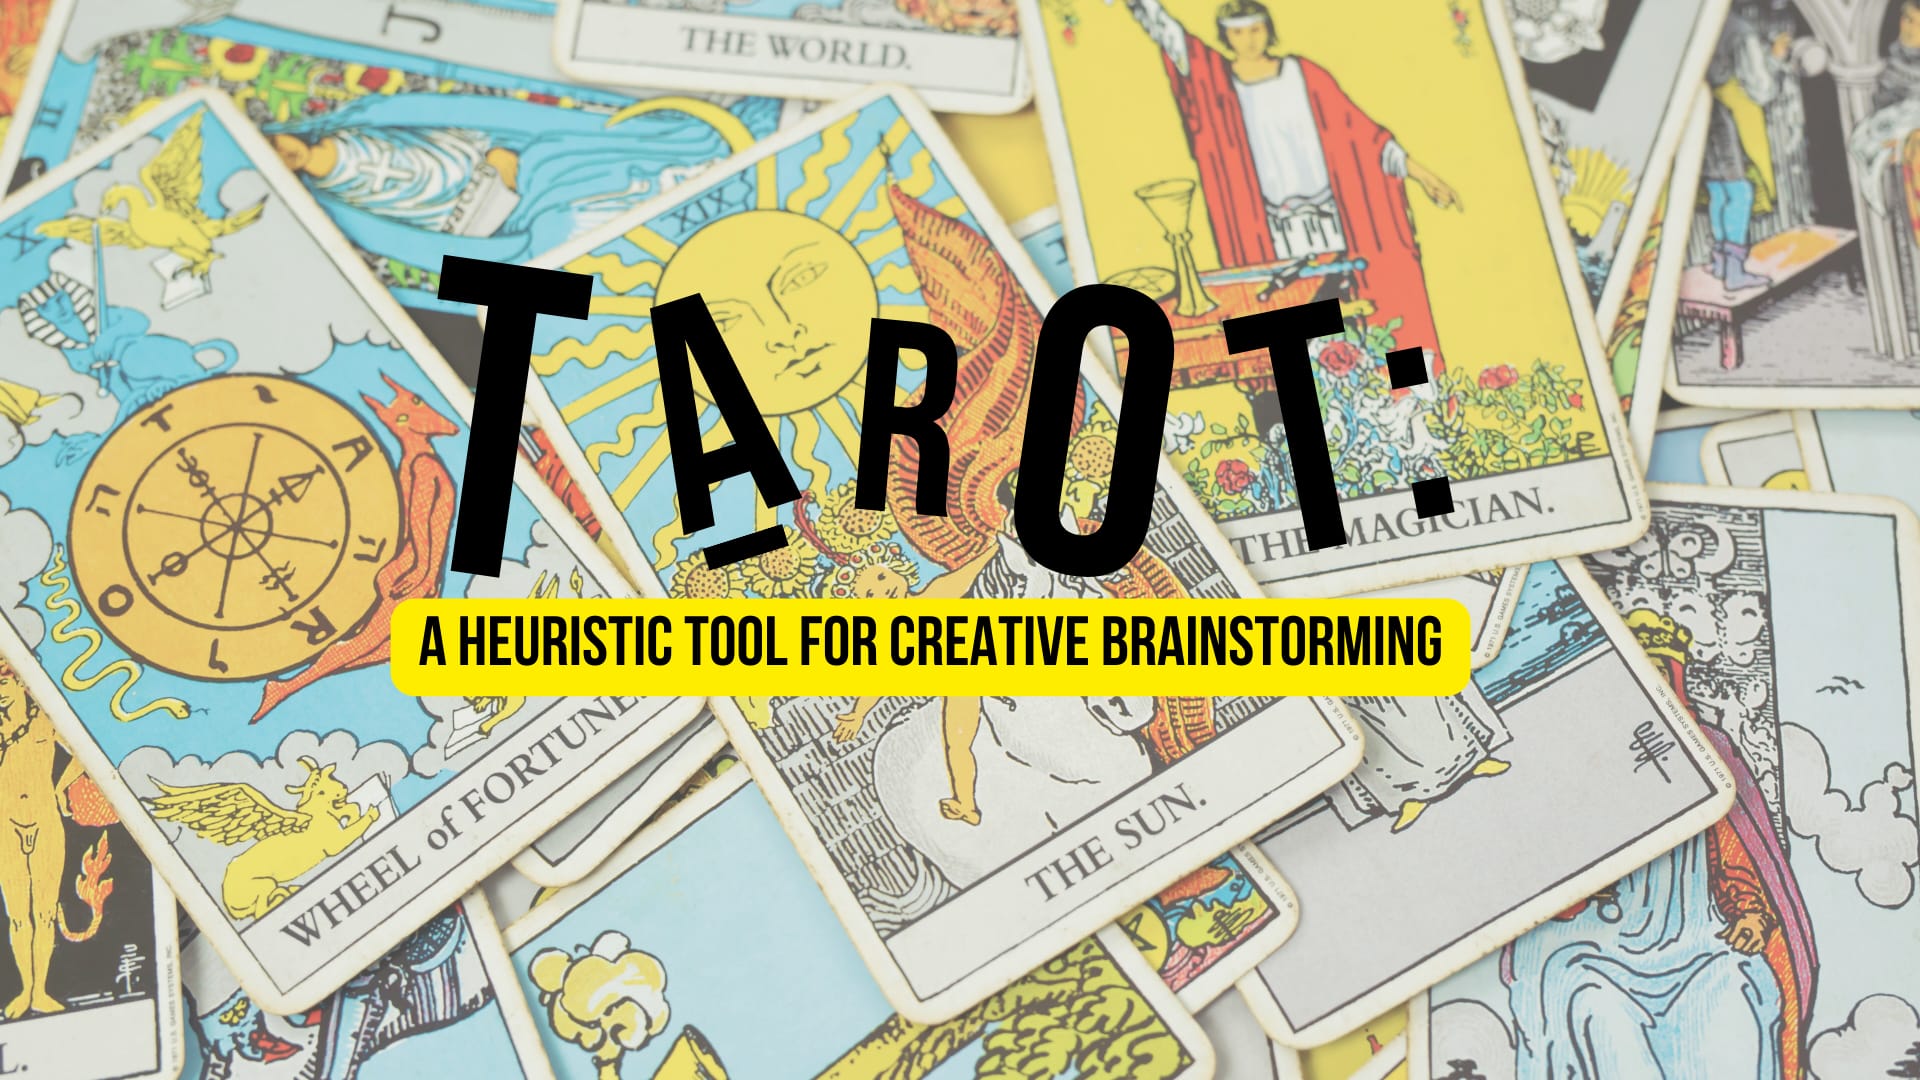 Tarot: A Heuristic Tool for Creative Brainstorming